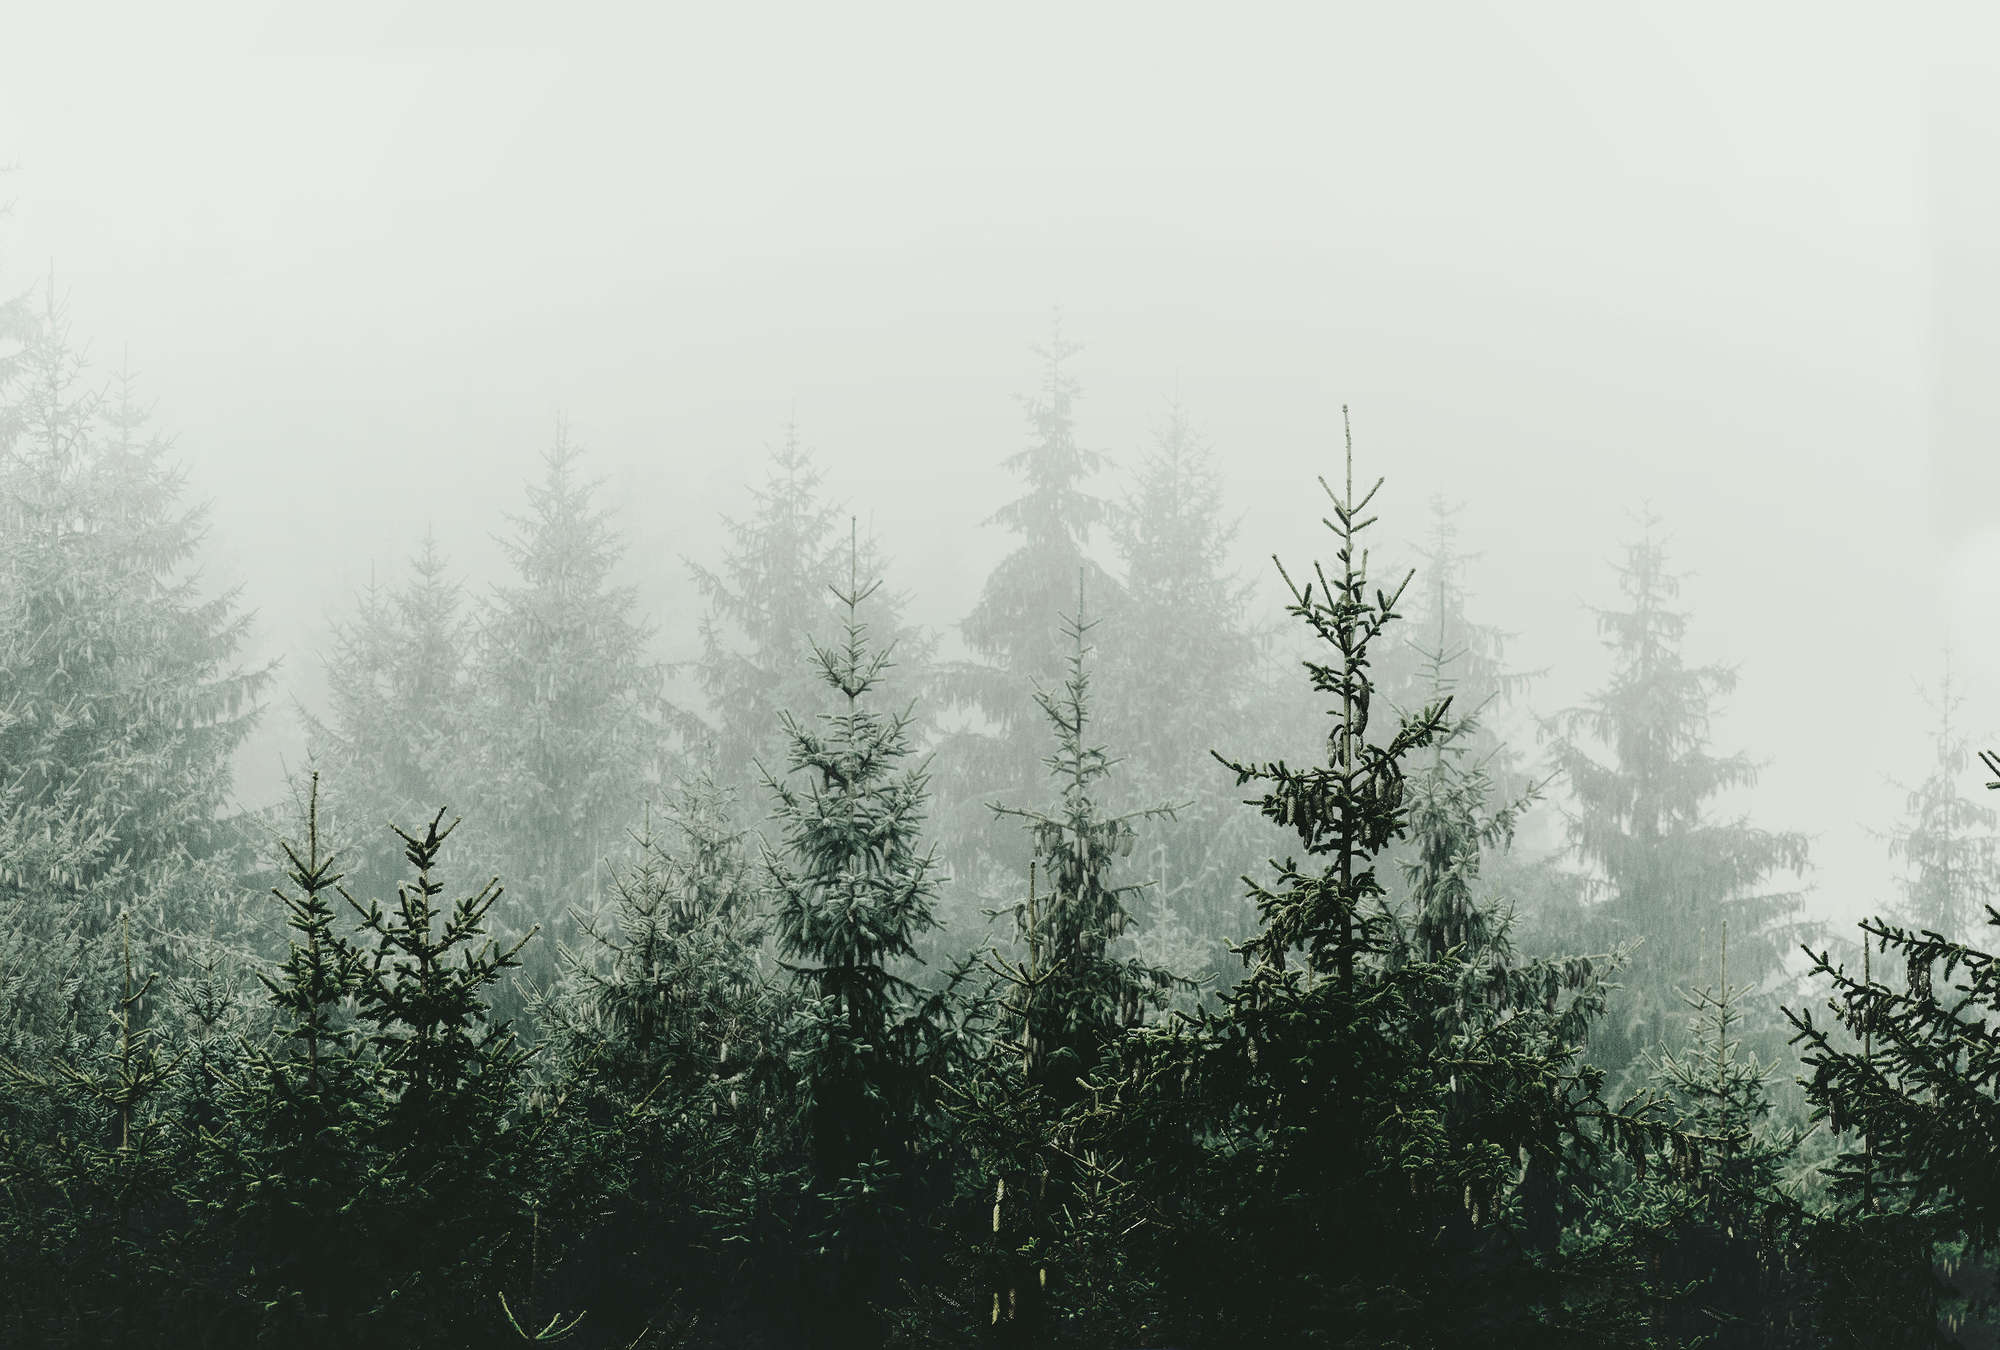             Fototapete Wald im Nebel immergrüne Tannen
        